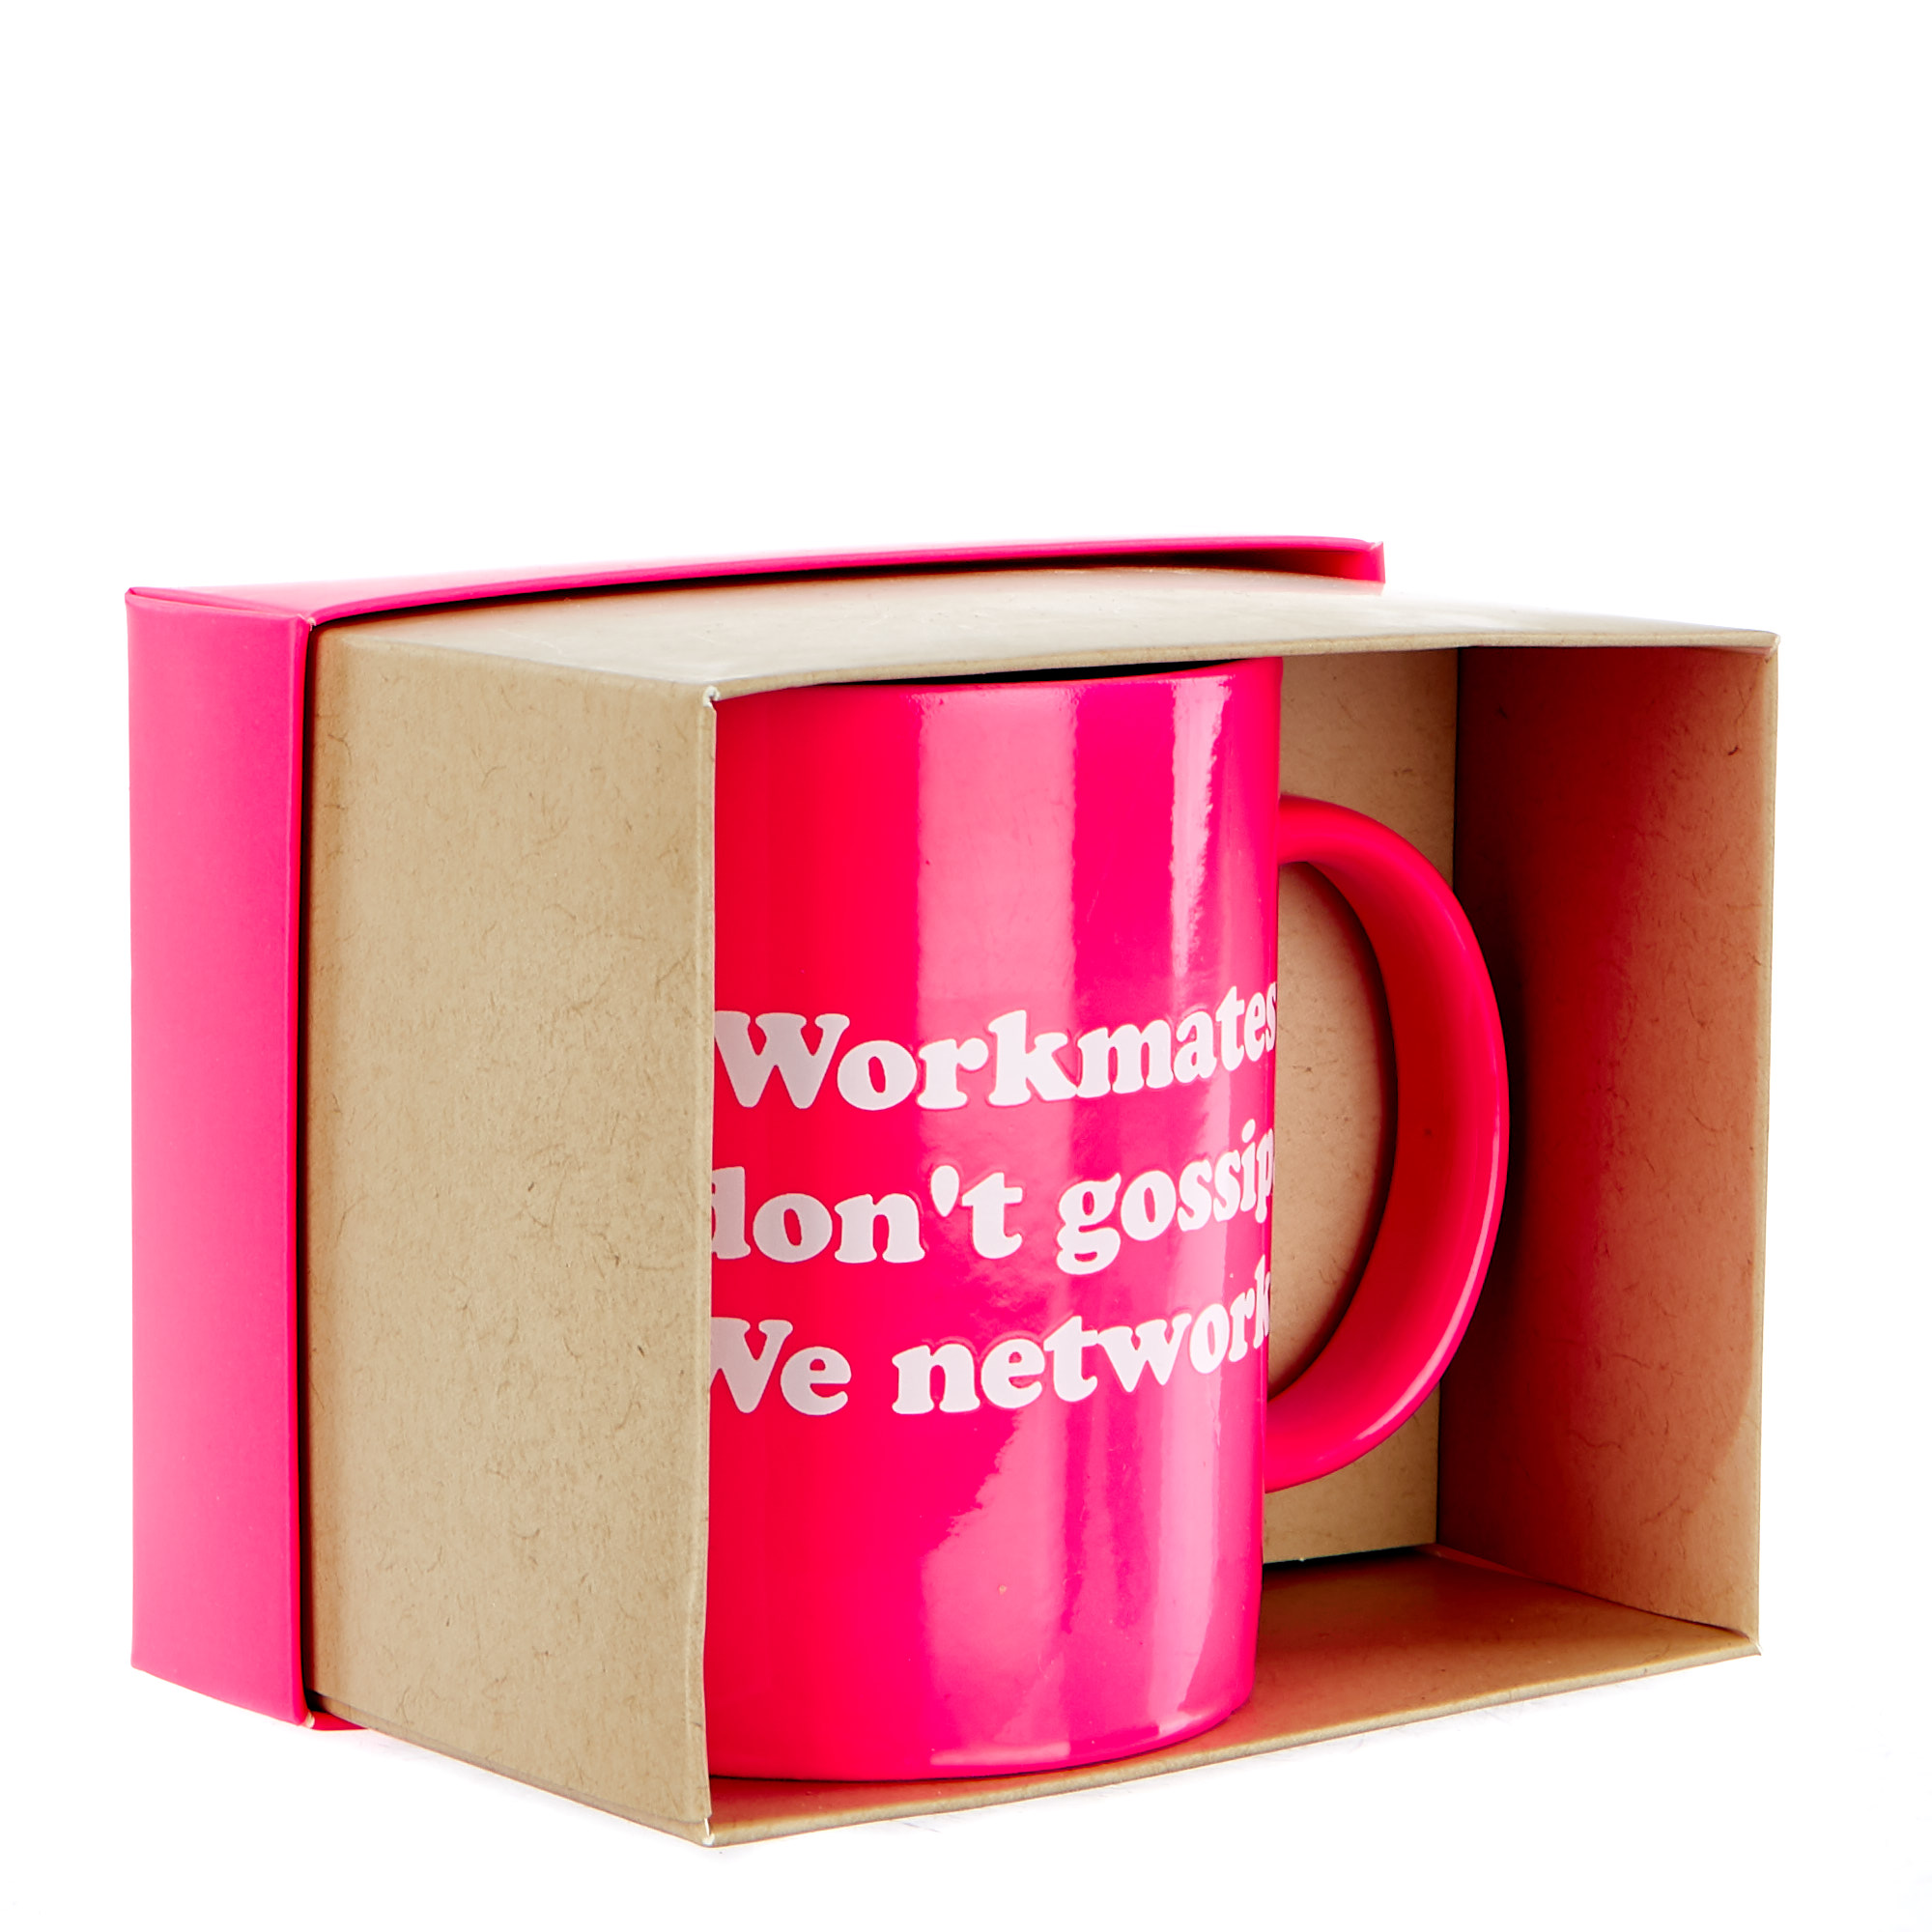 Workmates Don't Gossip" Mug"